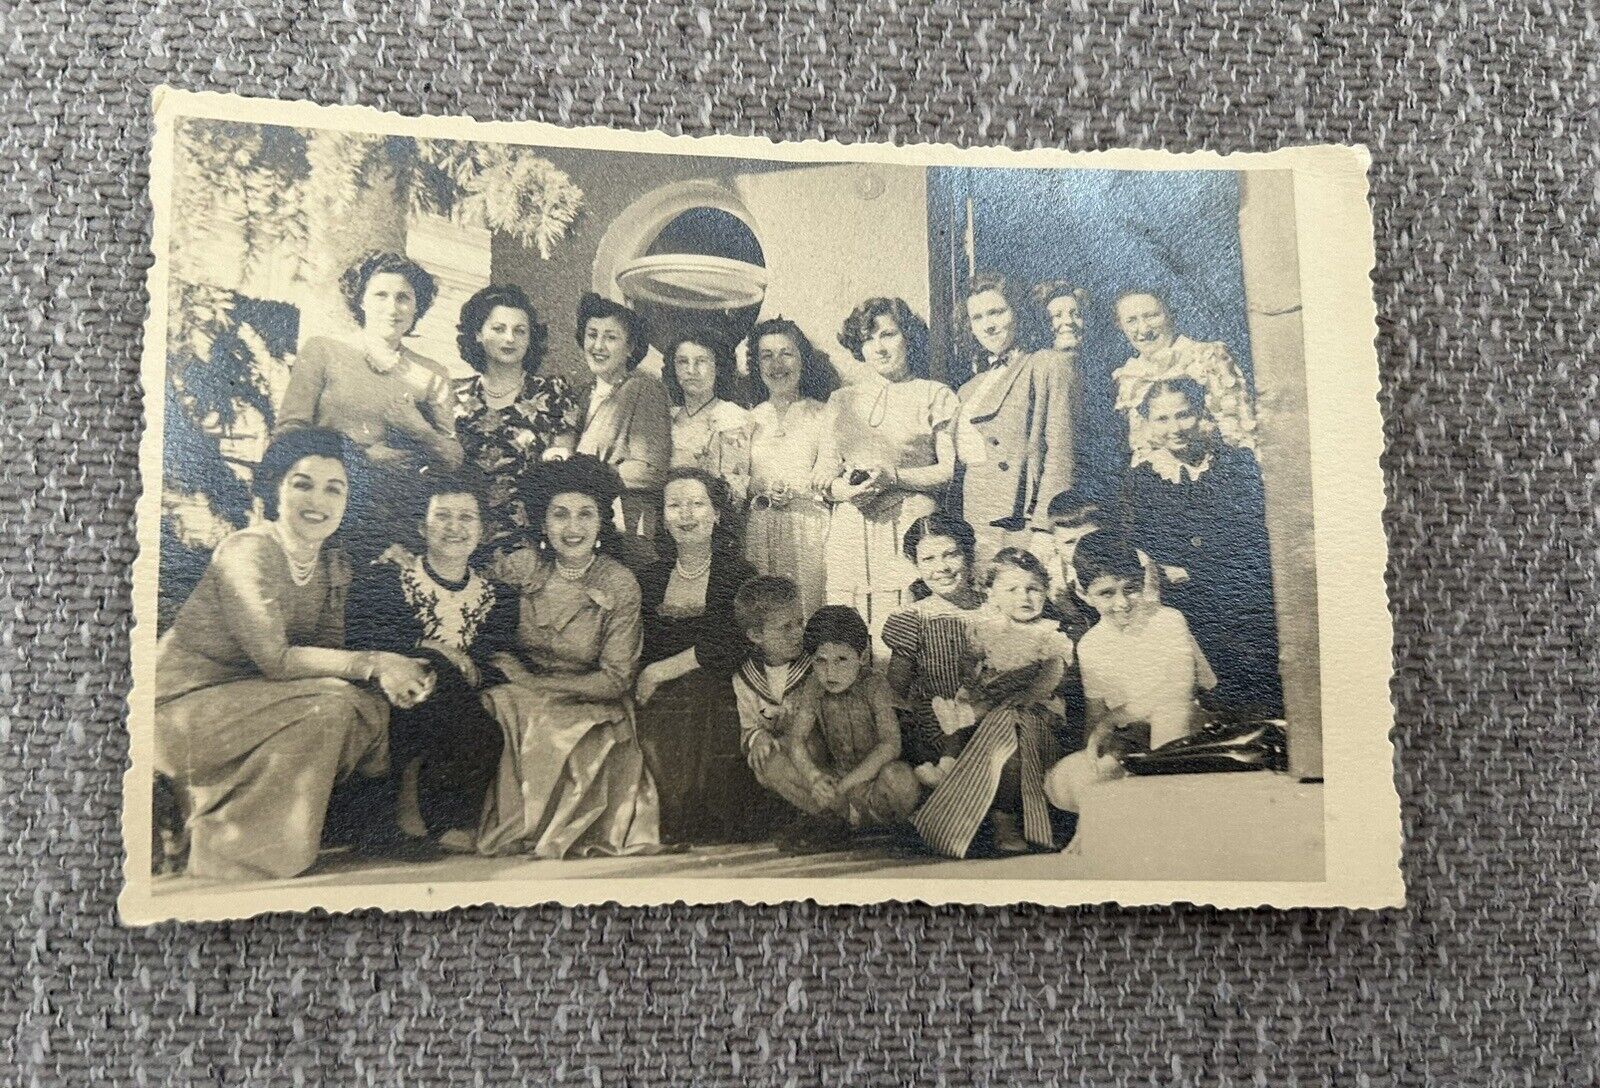 Turkey - Real Photo Group Of Turkish Women And Children 1940/1950s